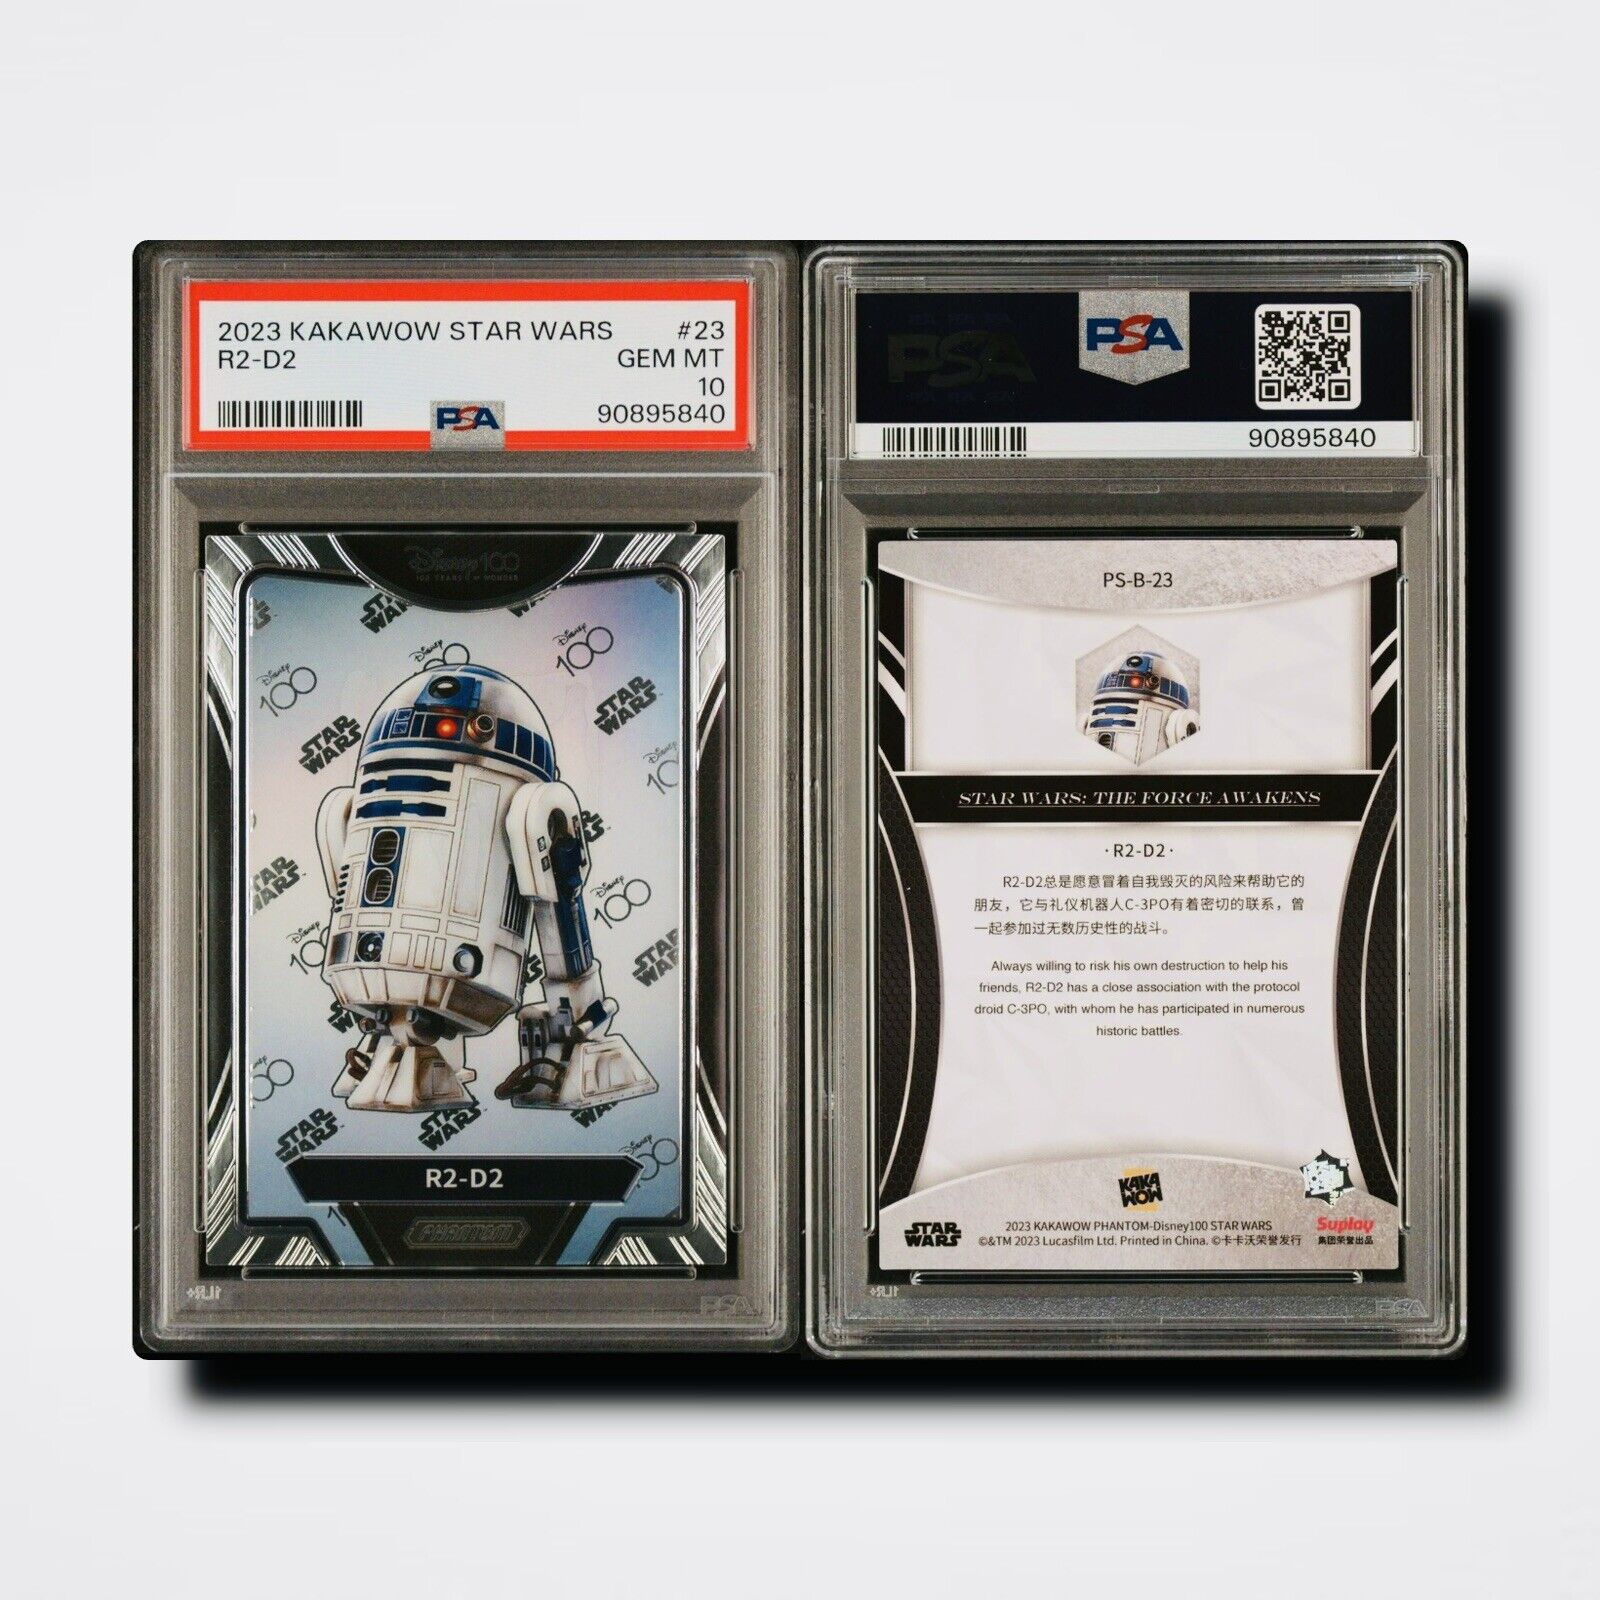 2023 Kakawow Phantom Star Wars R2-D2 PSA 10 Gem Mint PS-B-23 Disney